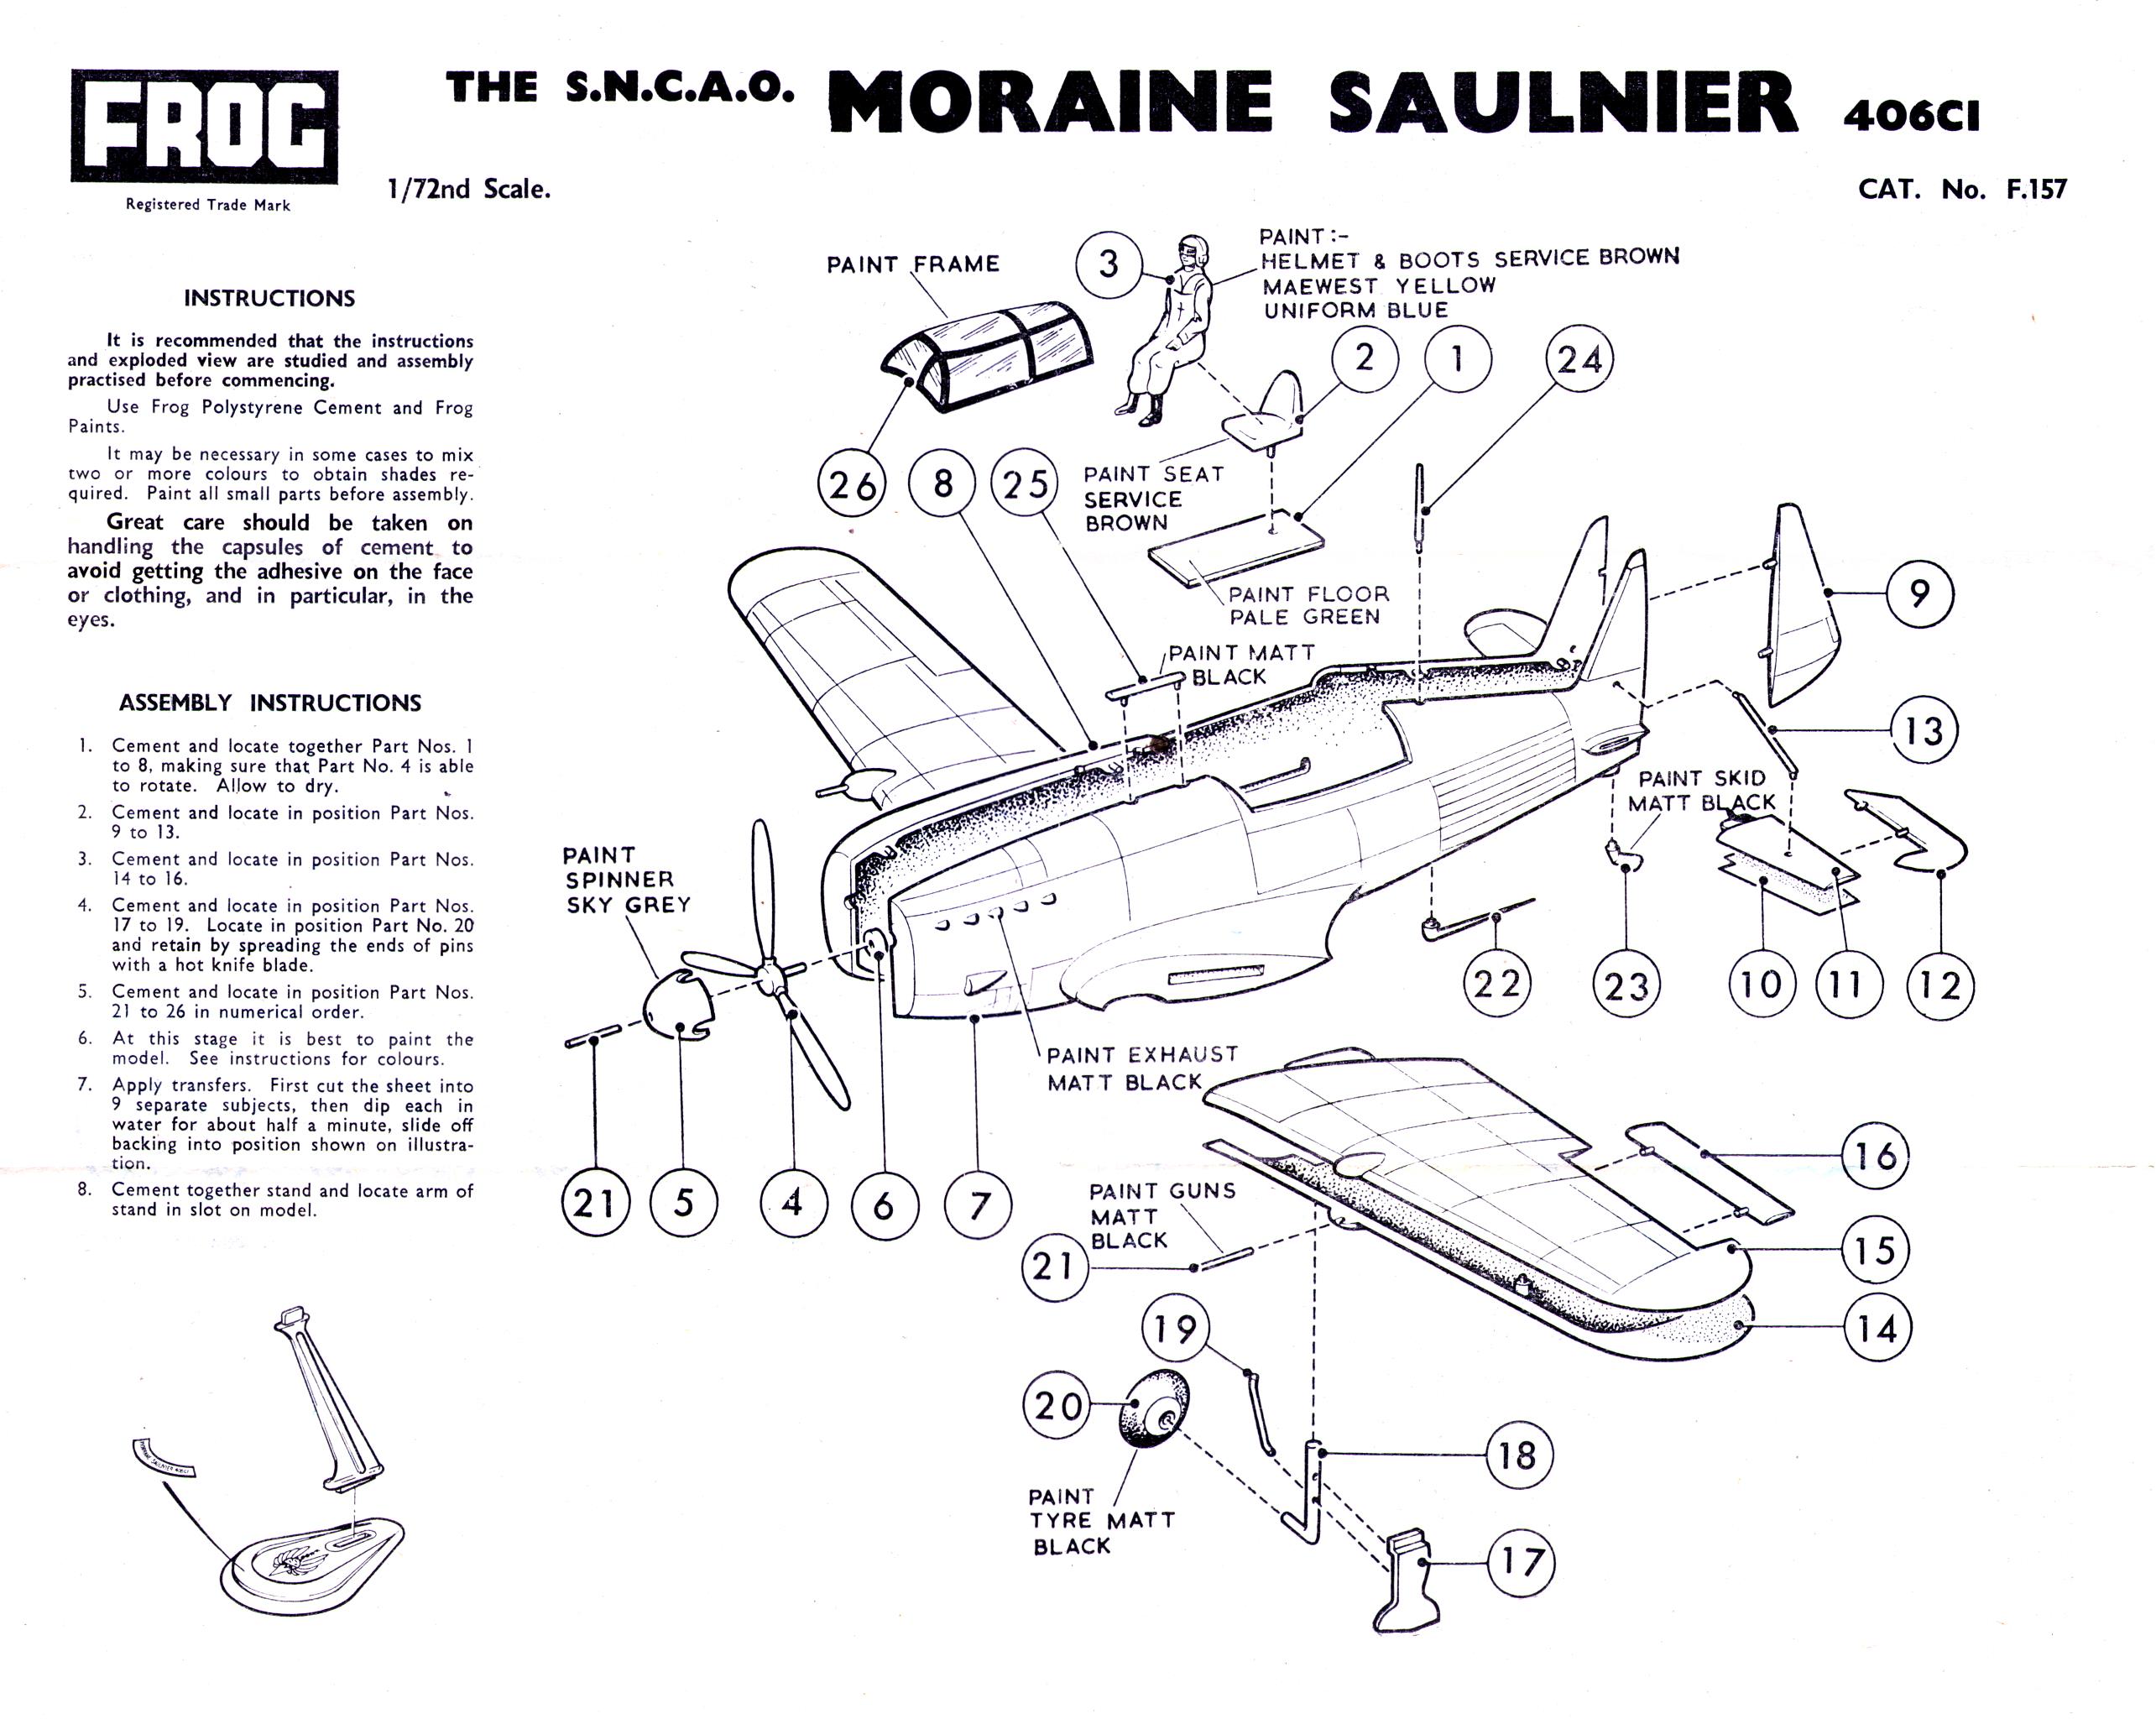 FROG Blue Series 157P, Morane Saulnier 406, 1963 assembly instructions